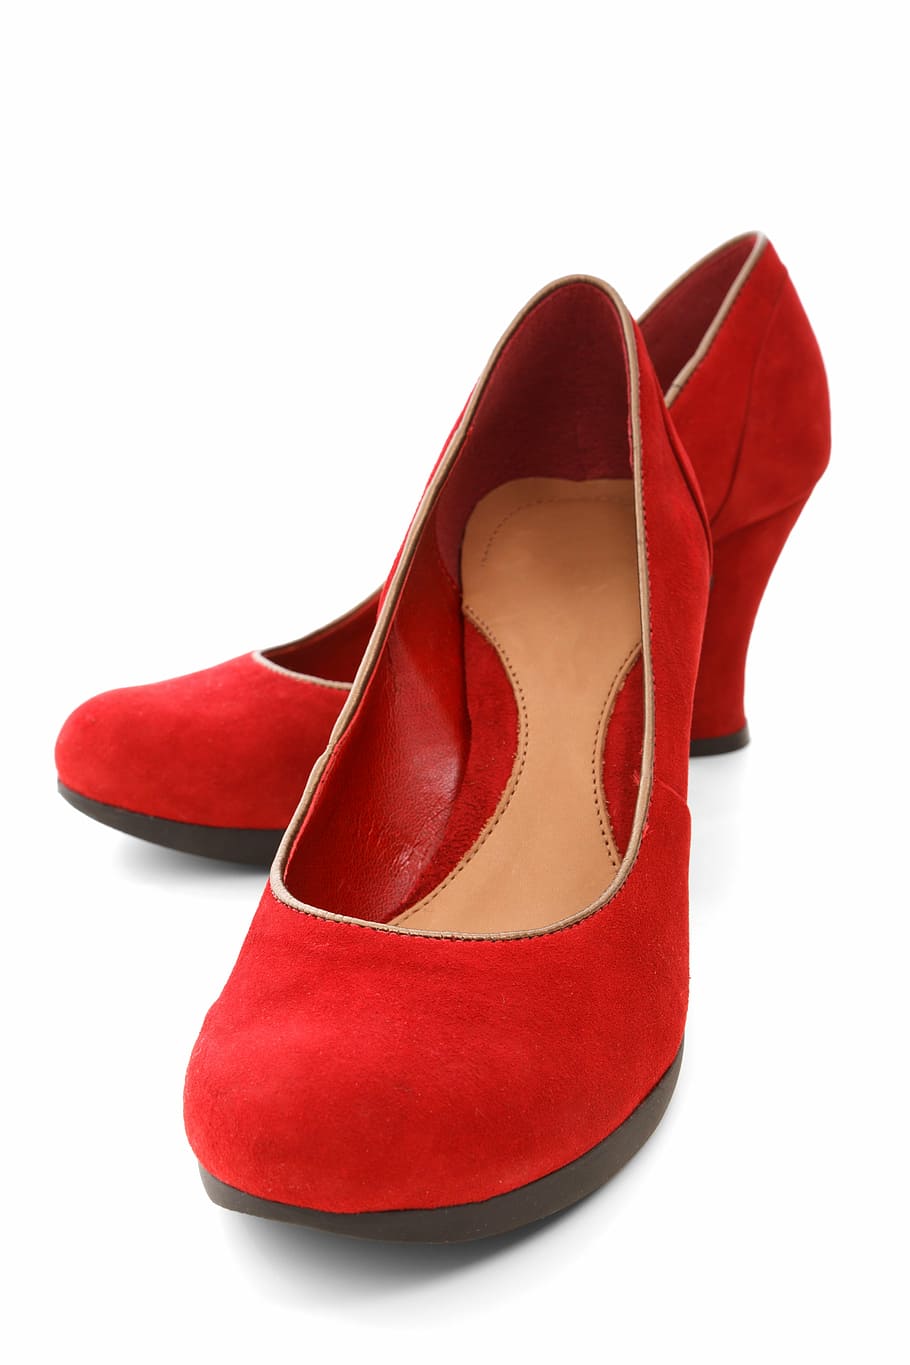 par, rojo, cuñas de gamuza, elegancia, elegante, moda, mujer, pie, calzado, glamour